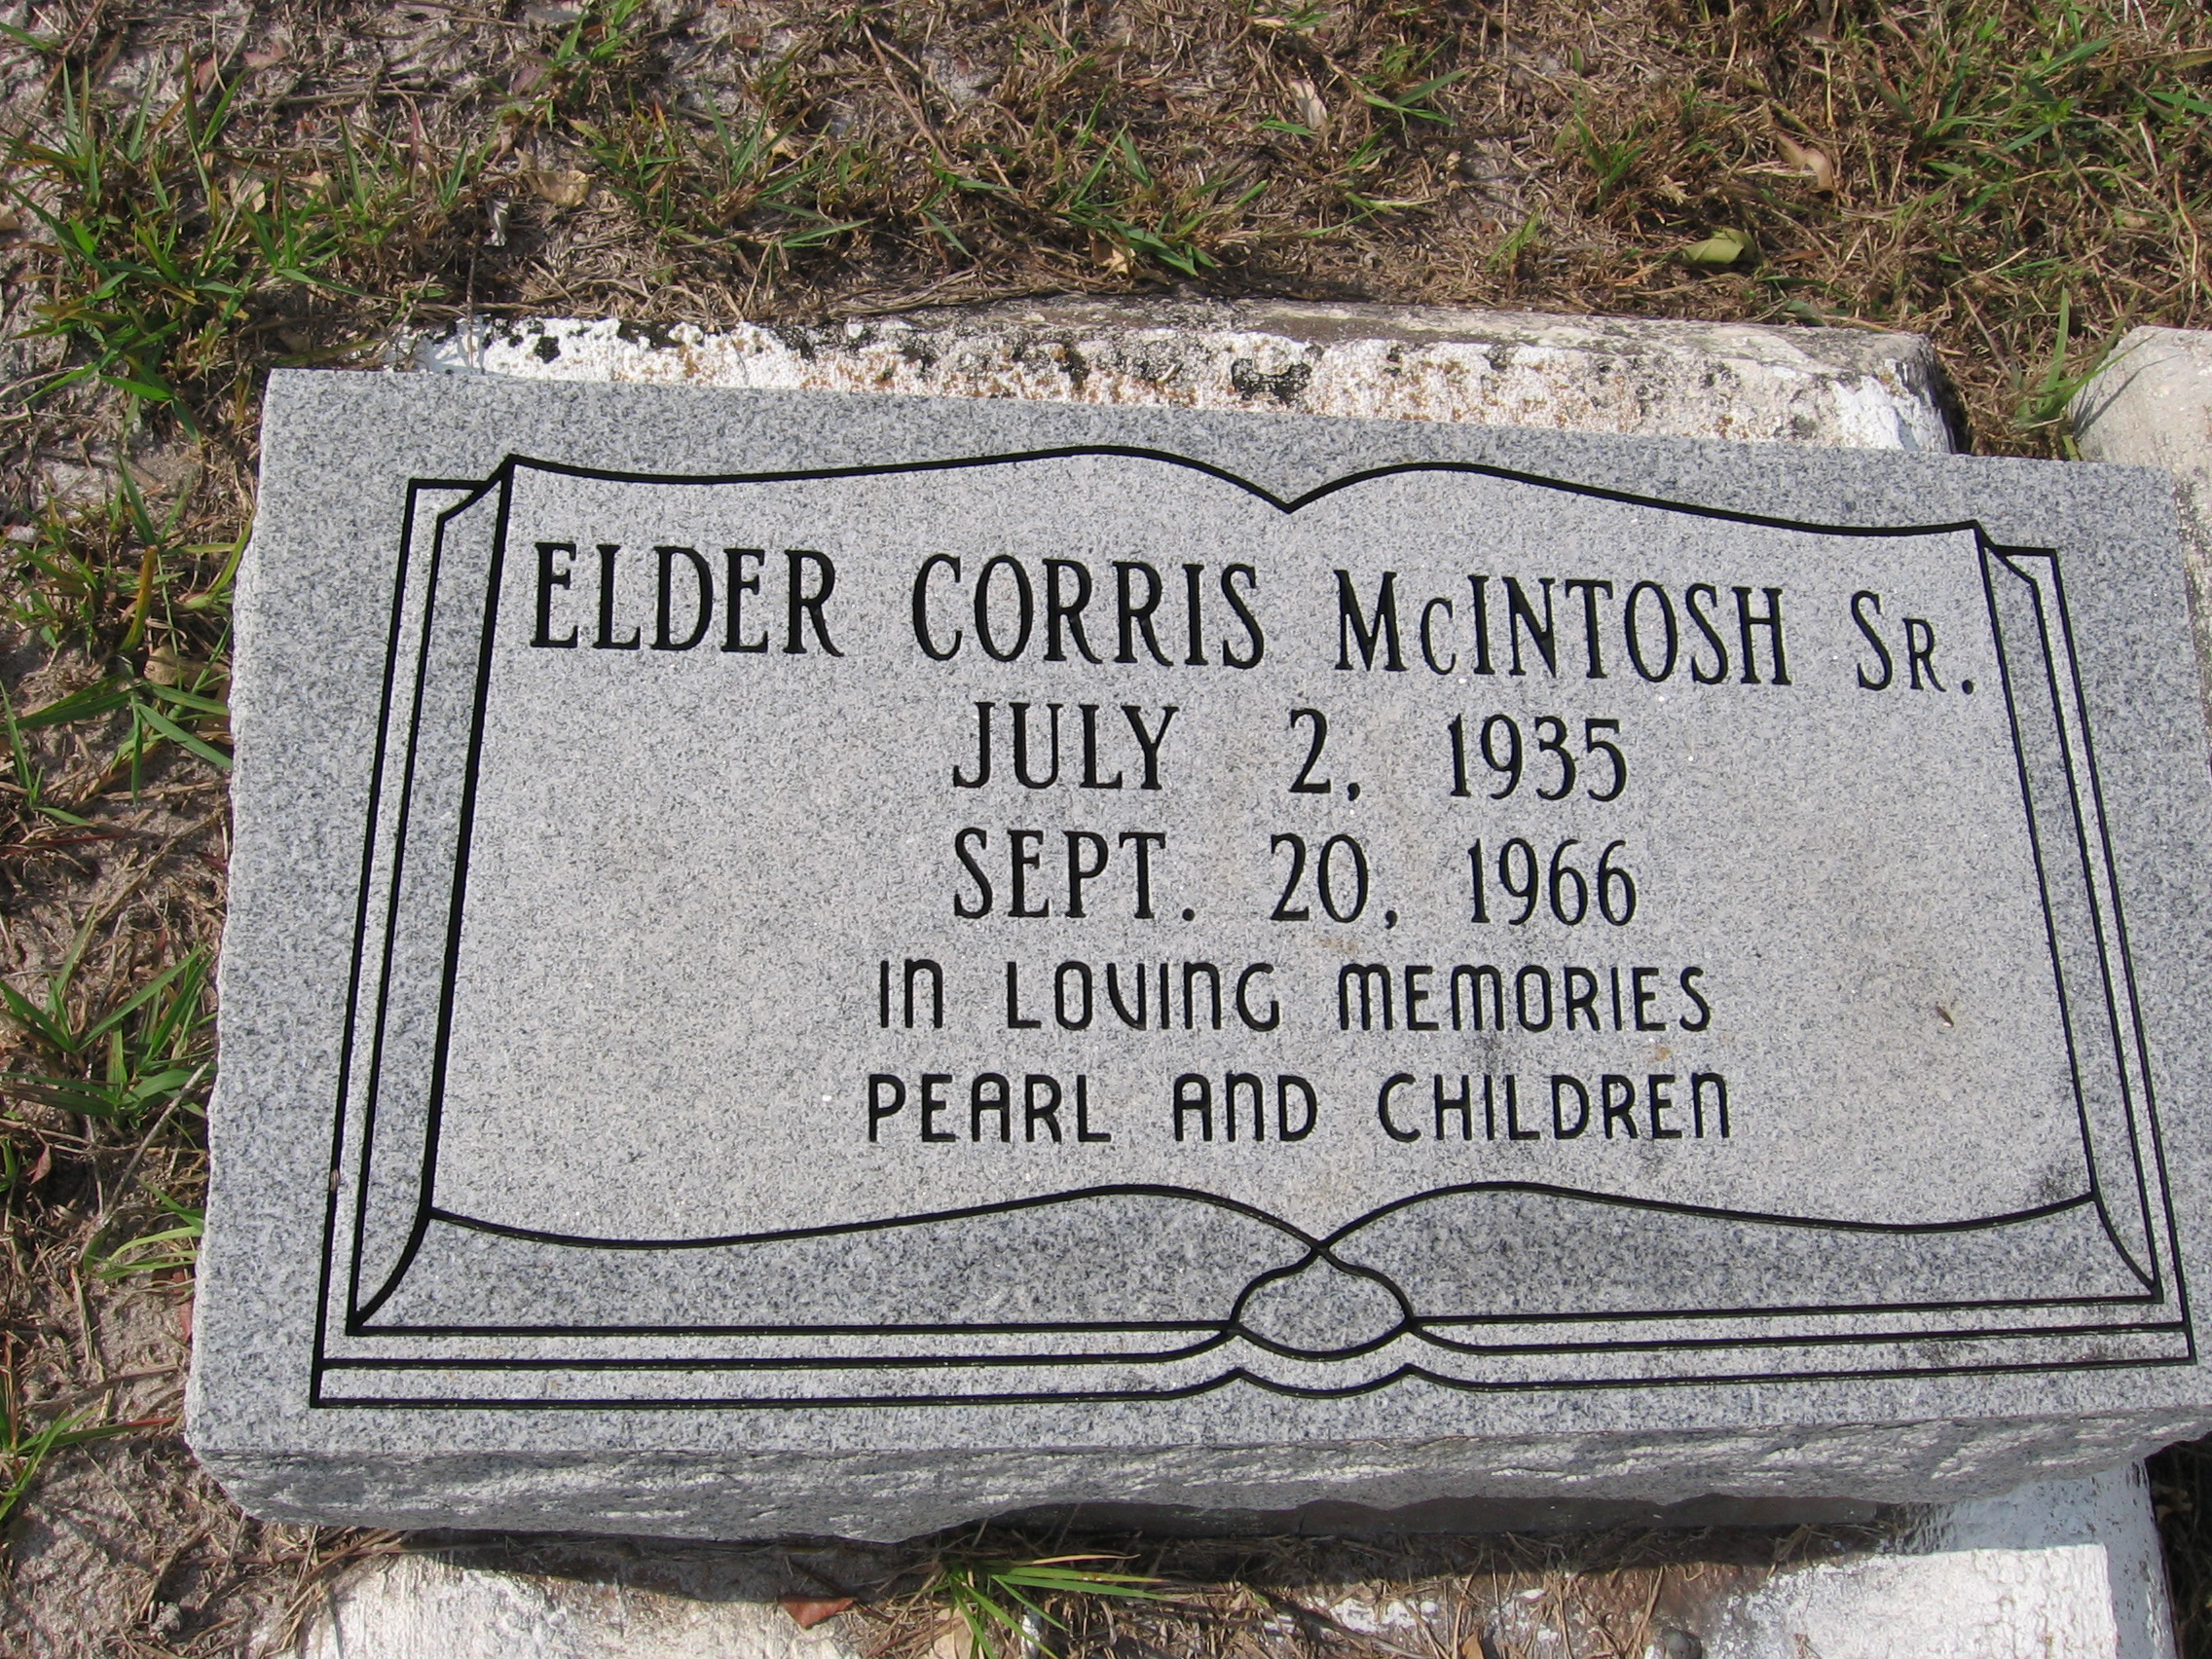 Elder Corris McIntosh, Sr